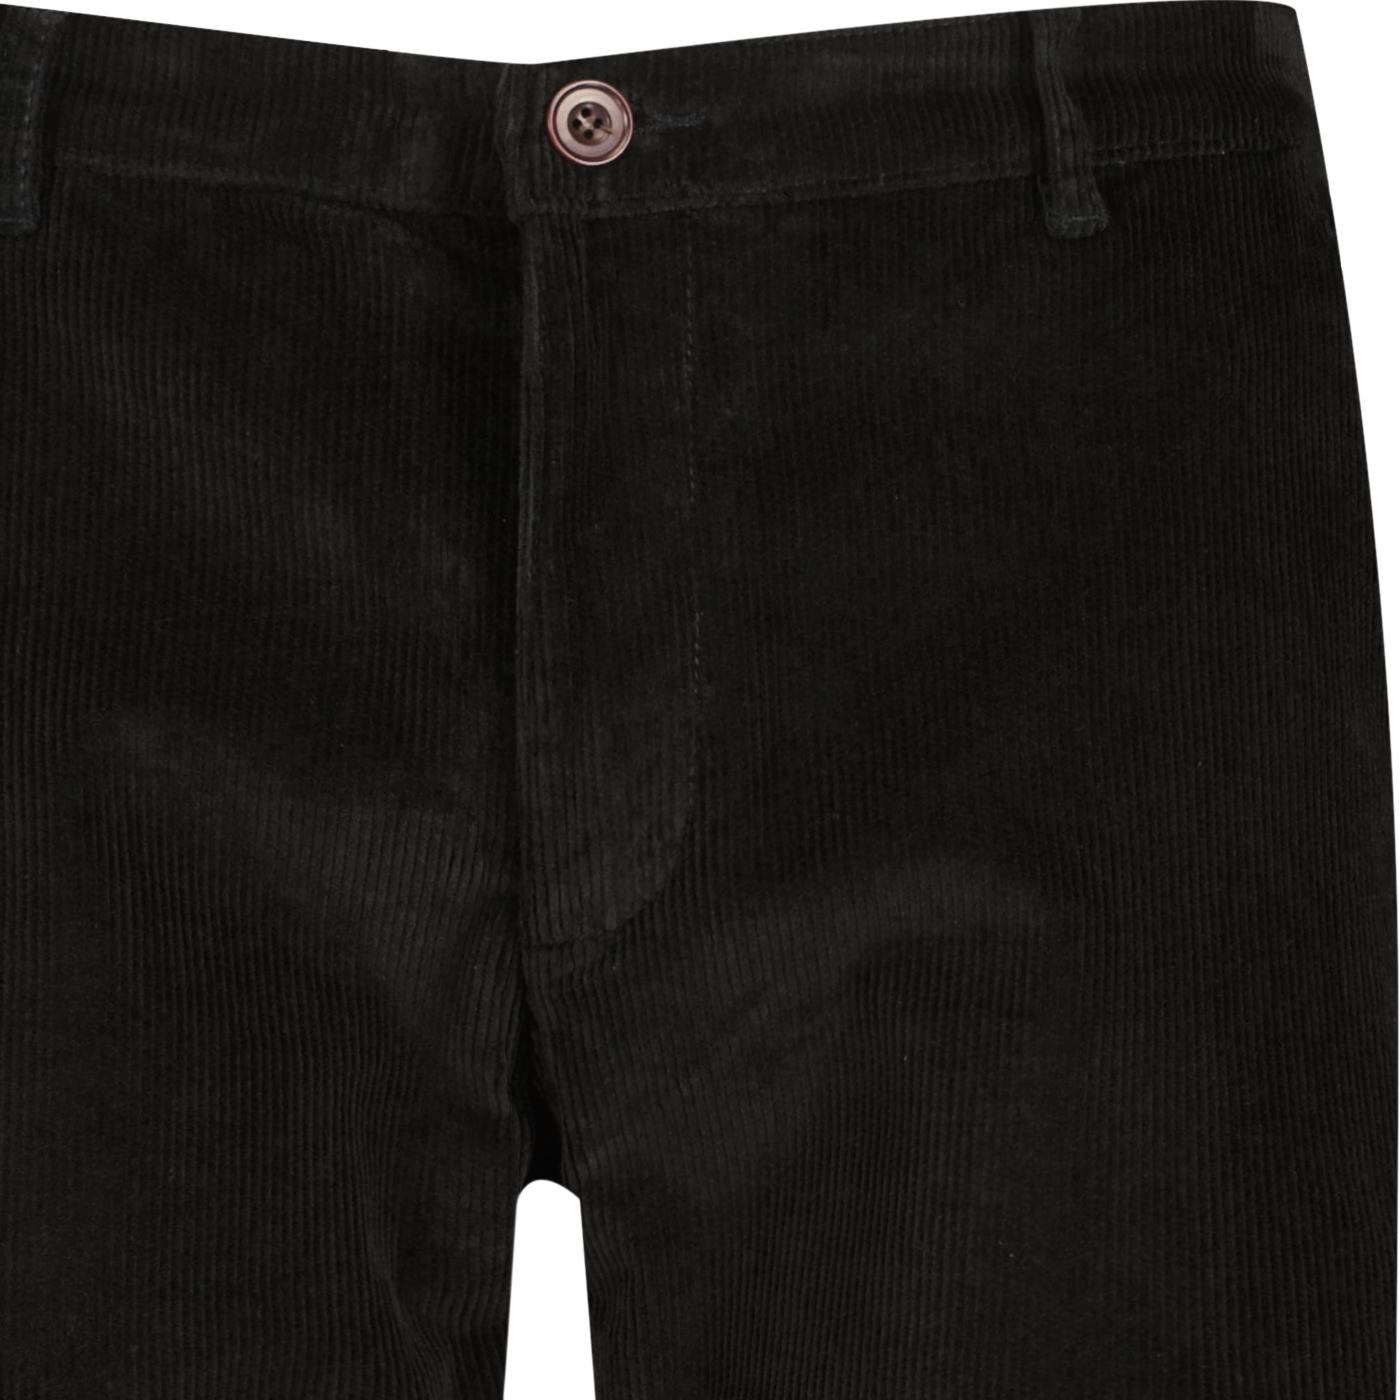 farah cord trousers black detail